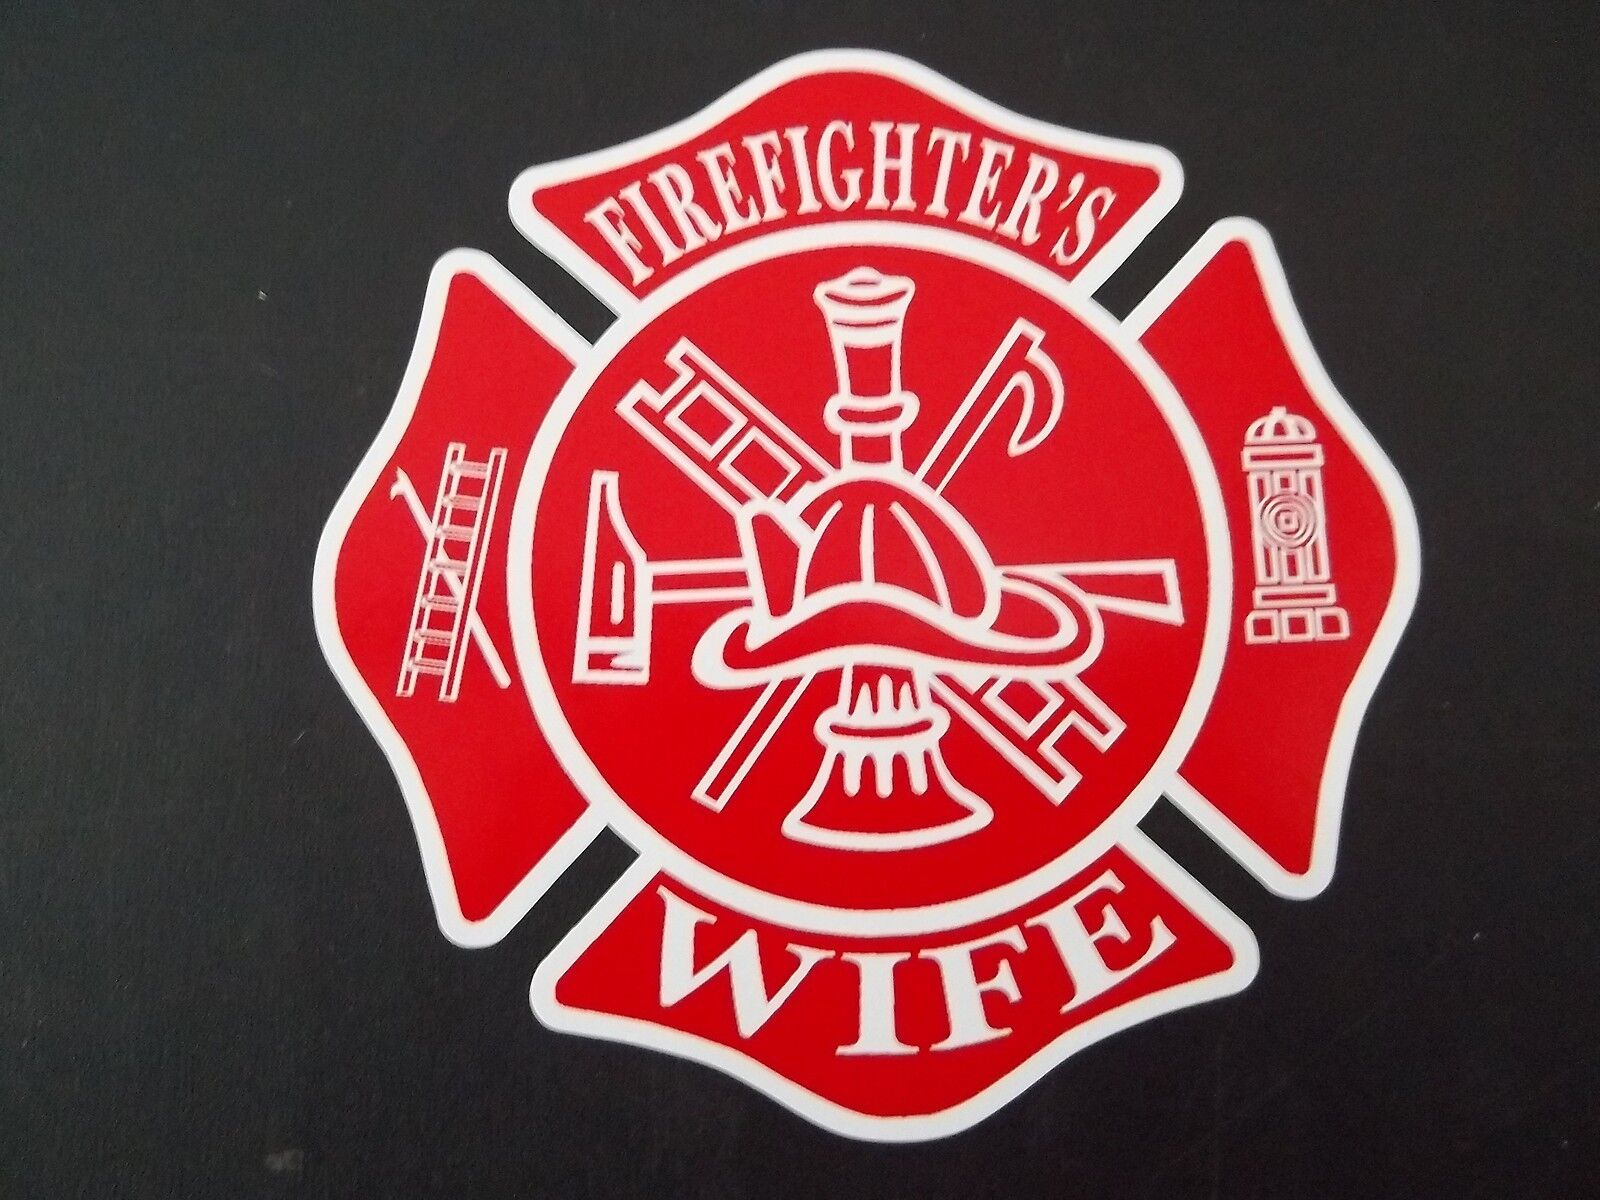 FIRE FIGHTER WIFE EMBLEM SHIELD RESCUE RESPONSE TRUCK HELMET STICKER DECAL L24